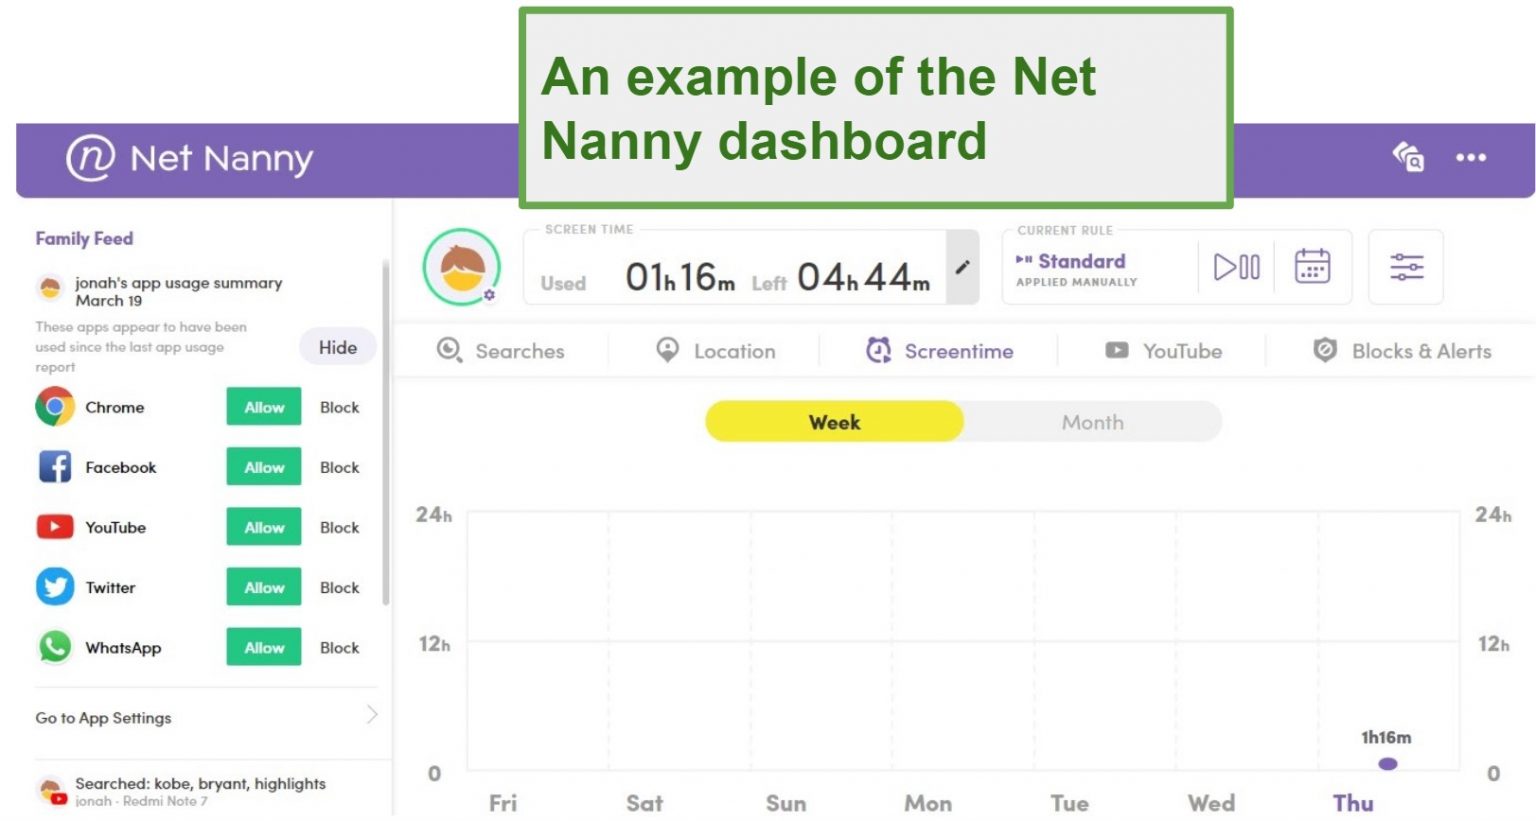 free net nanny software